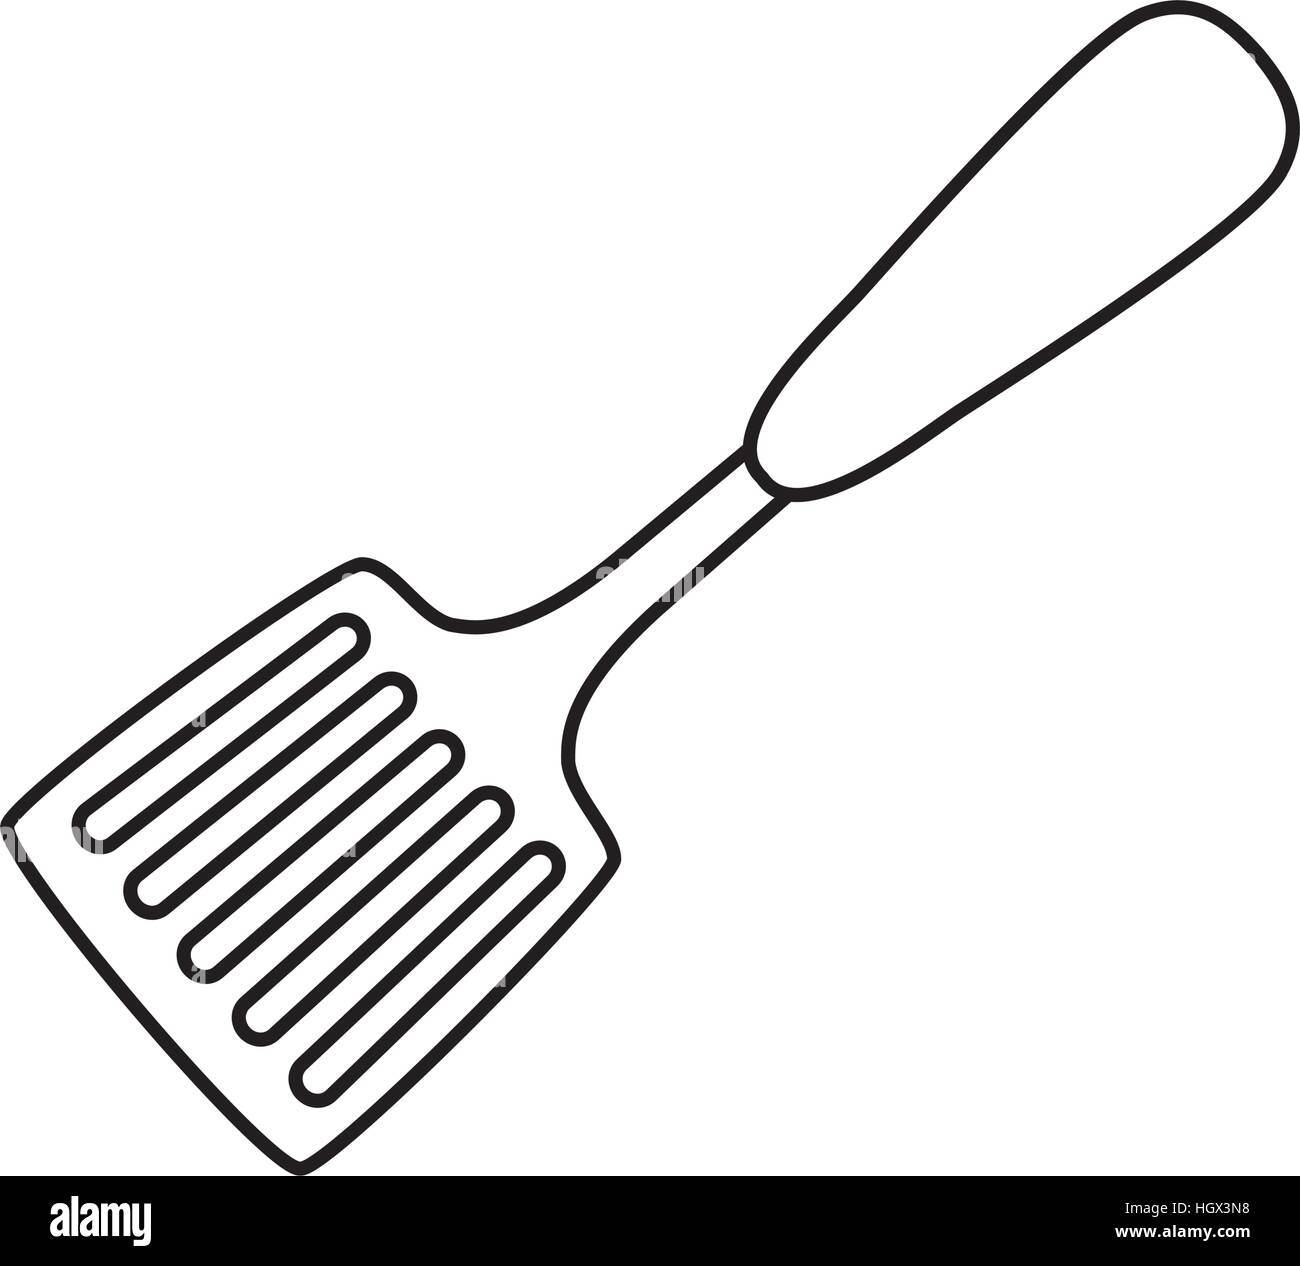 https://c8.alamy.com/comp/HGX3N8/turner-kitchen-utensil-icon-vector-illustration-graphic-design-HGX3N8.jpg